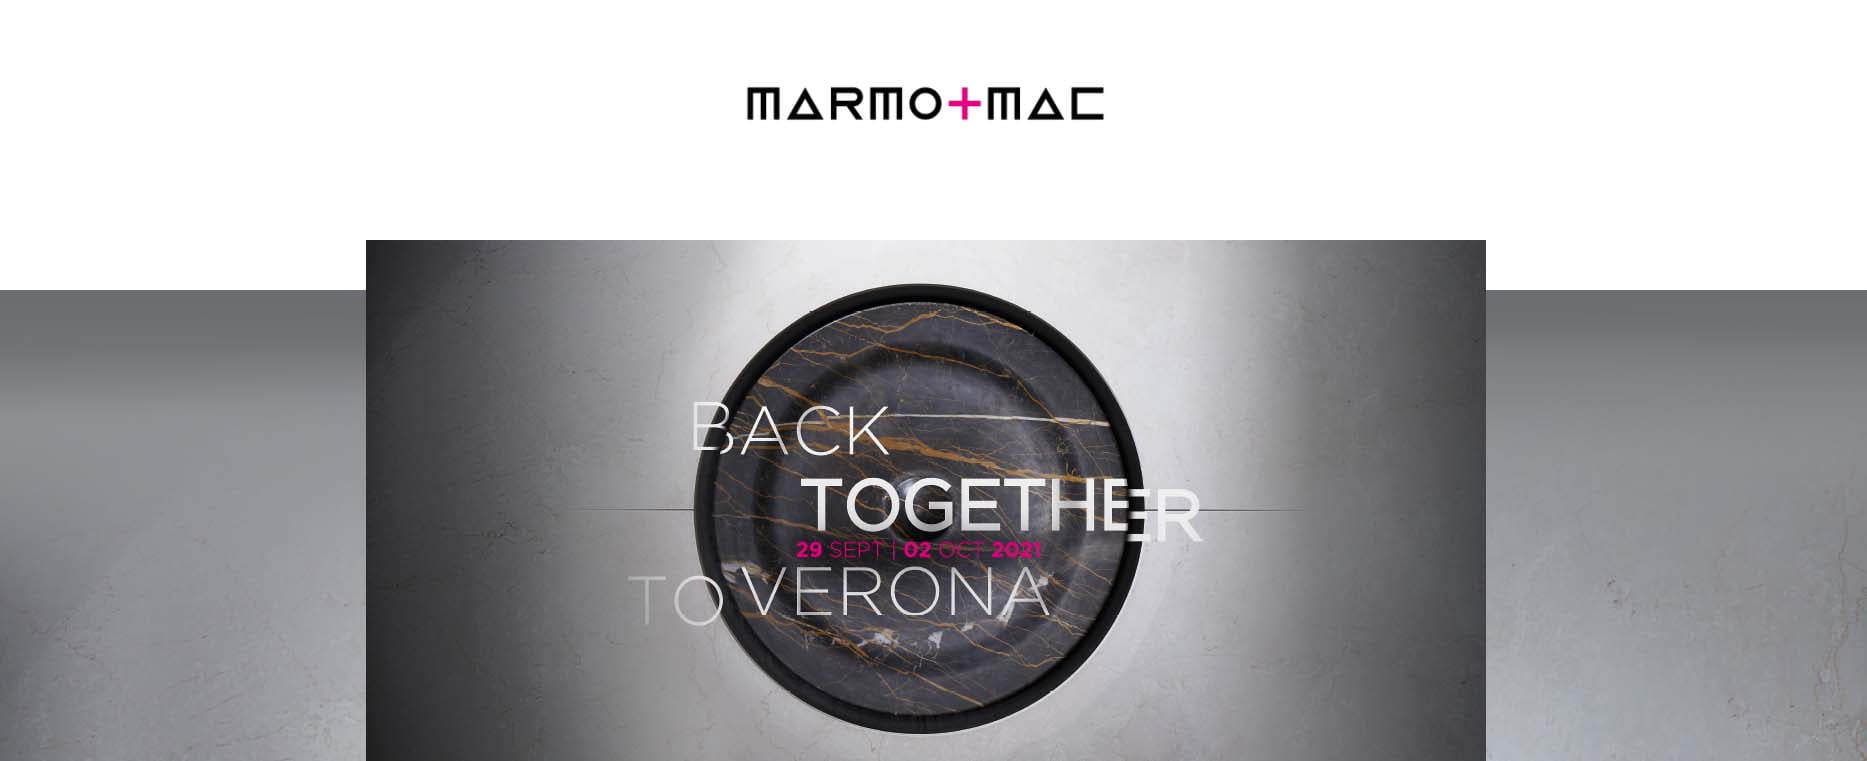 MarmoMac Verona